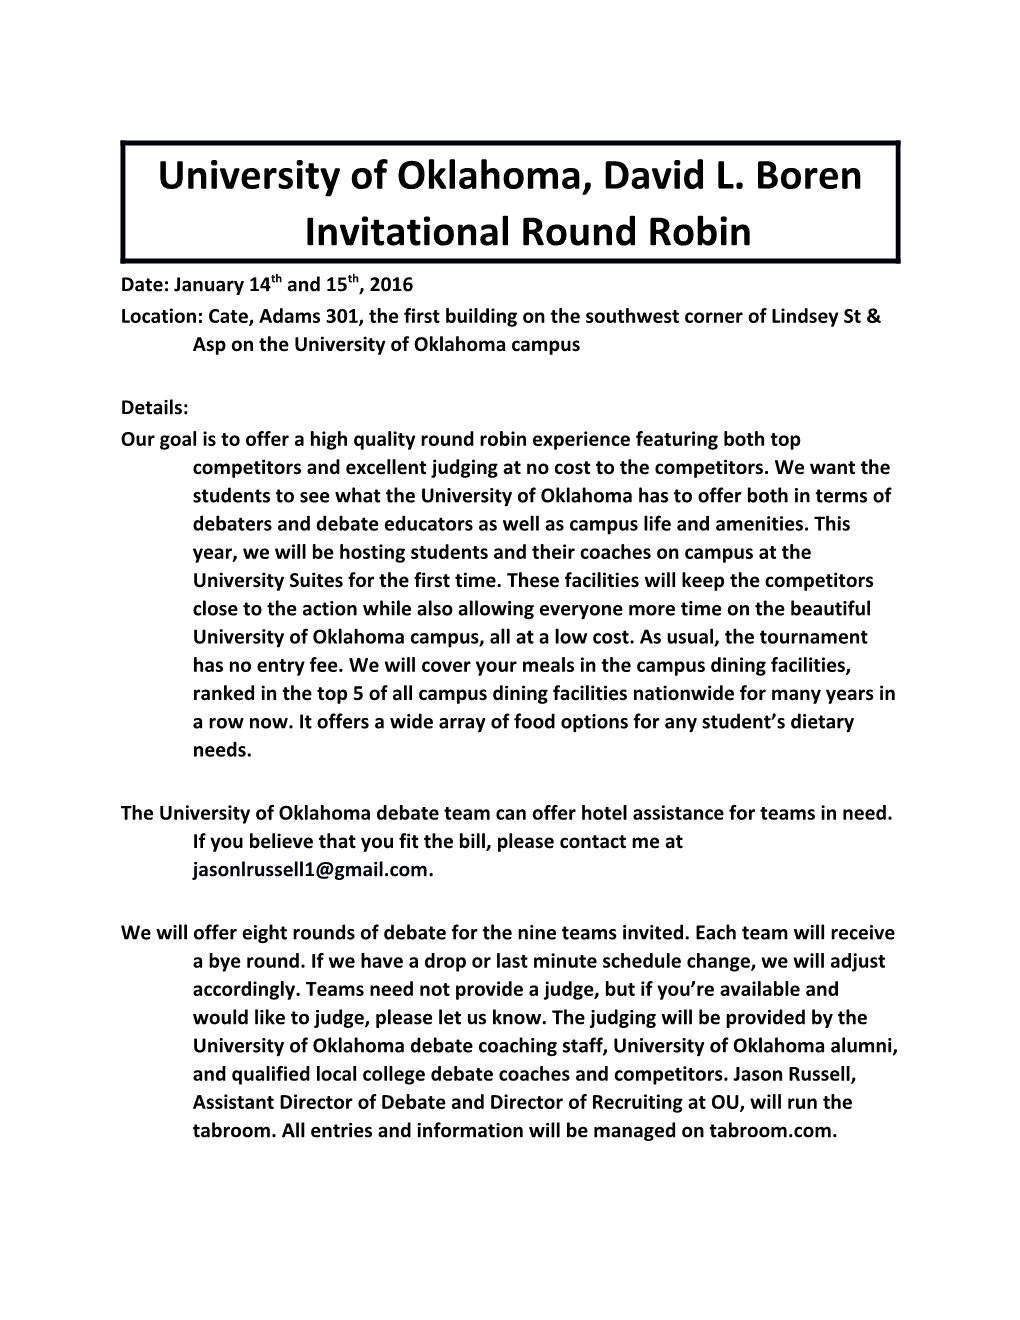 University of Oklahoma, David L. Boren Invitational Round Robin